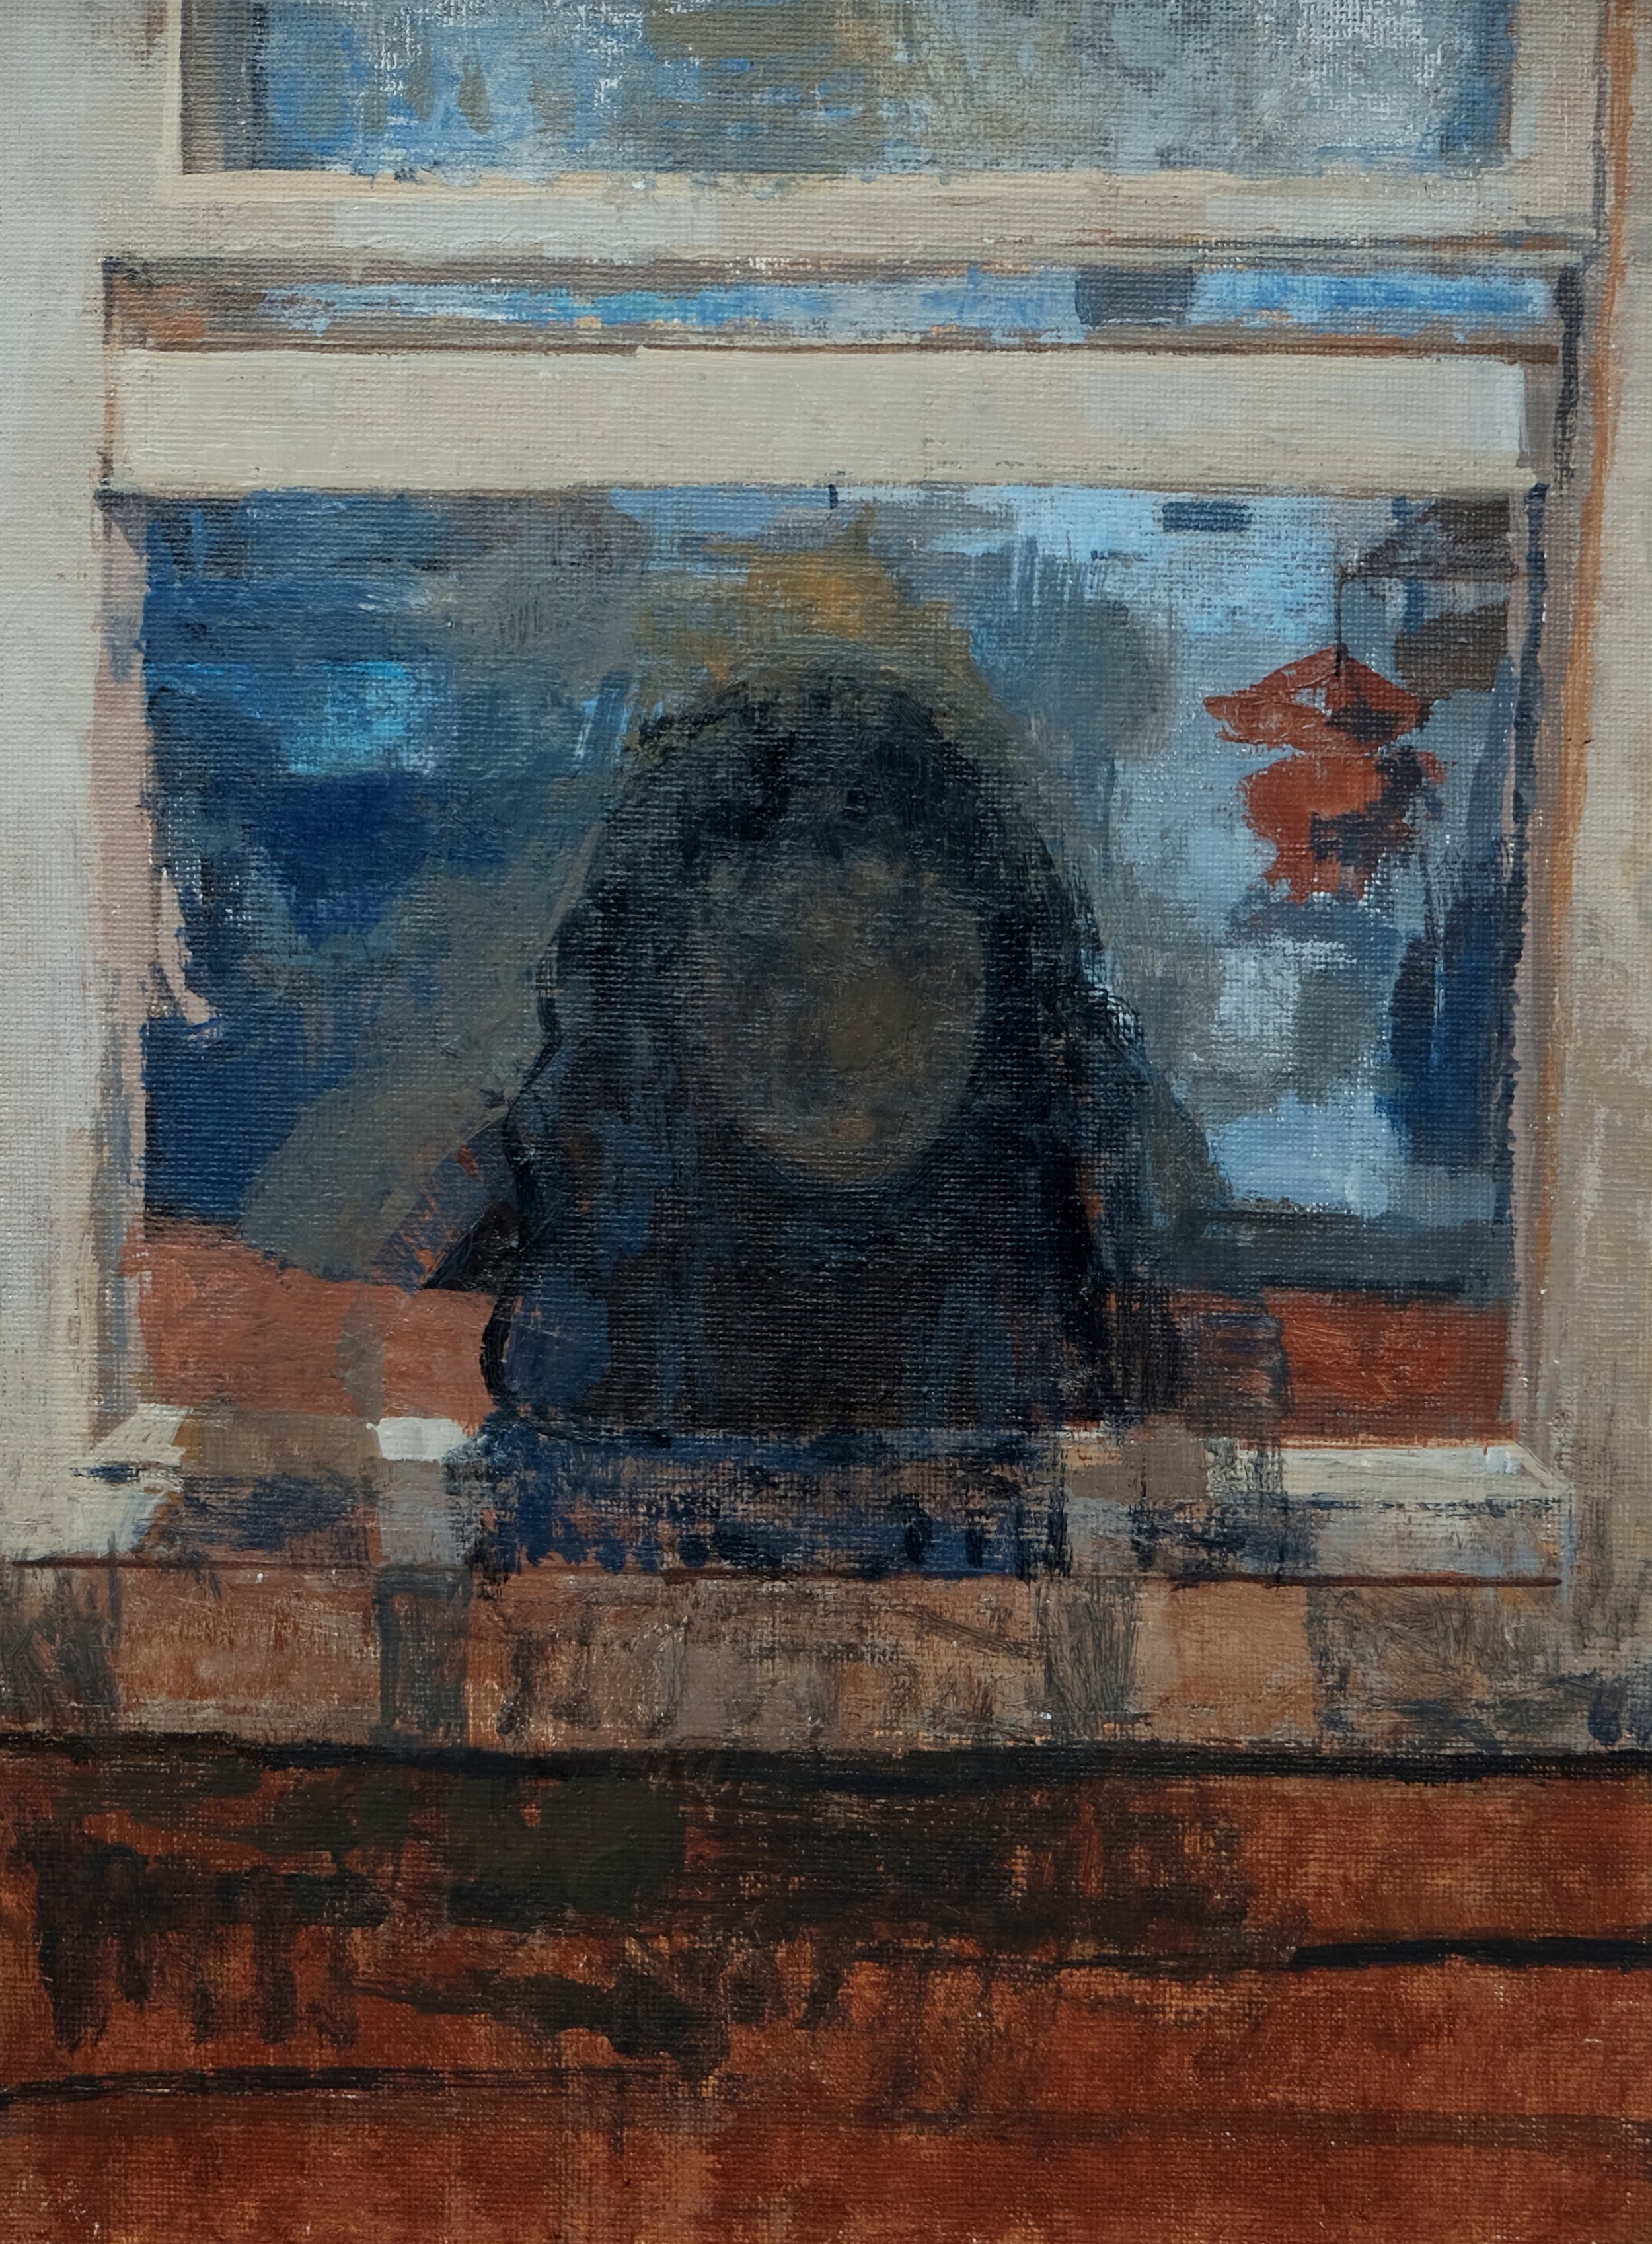 Amy Scherer Window girl painting acrylic may 2020.JPG